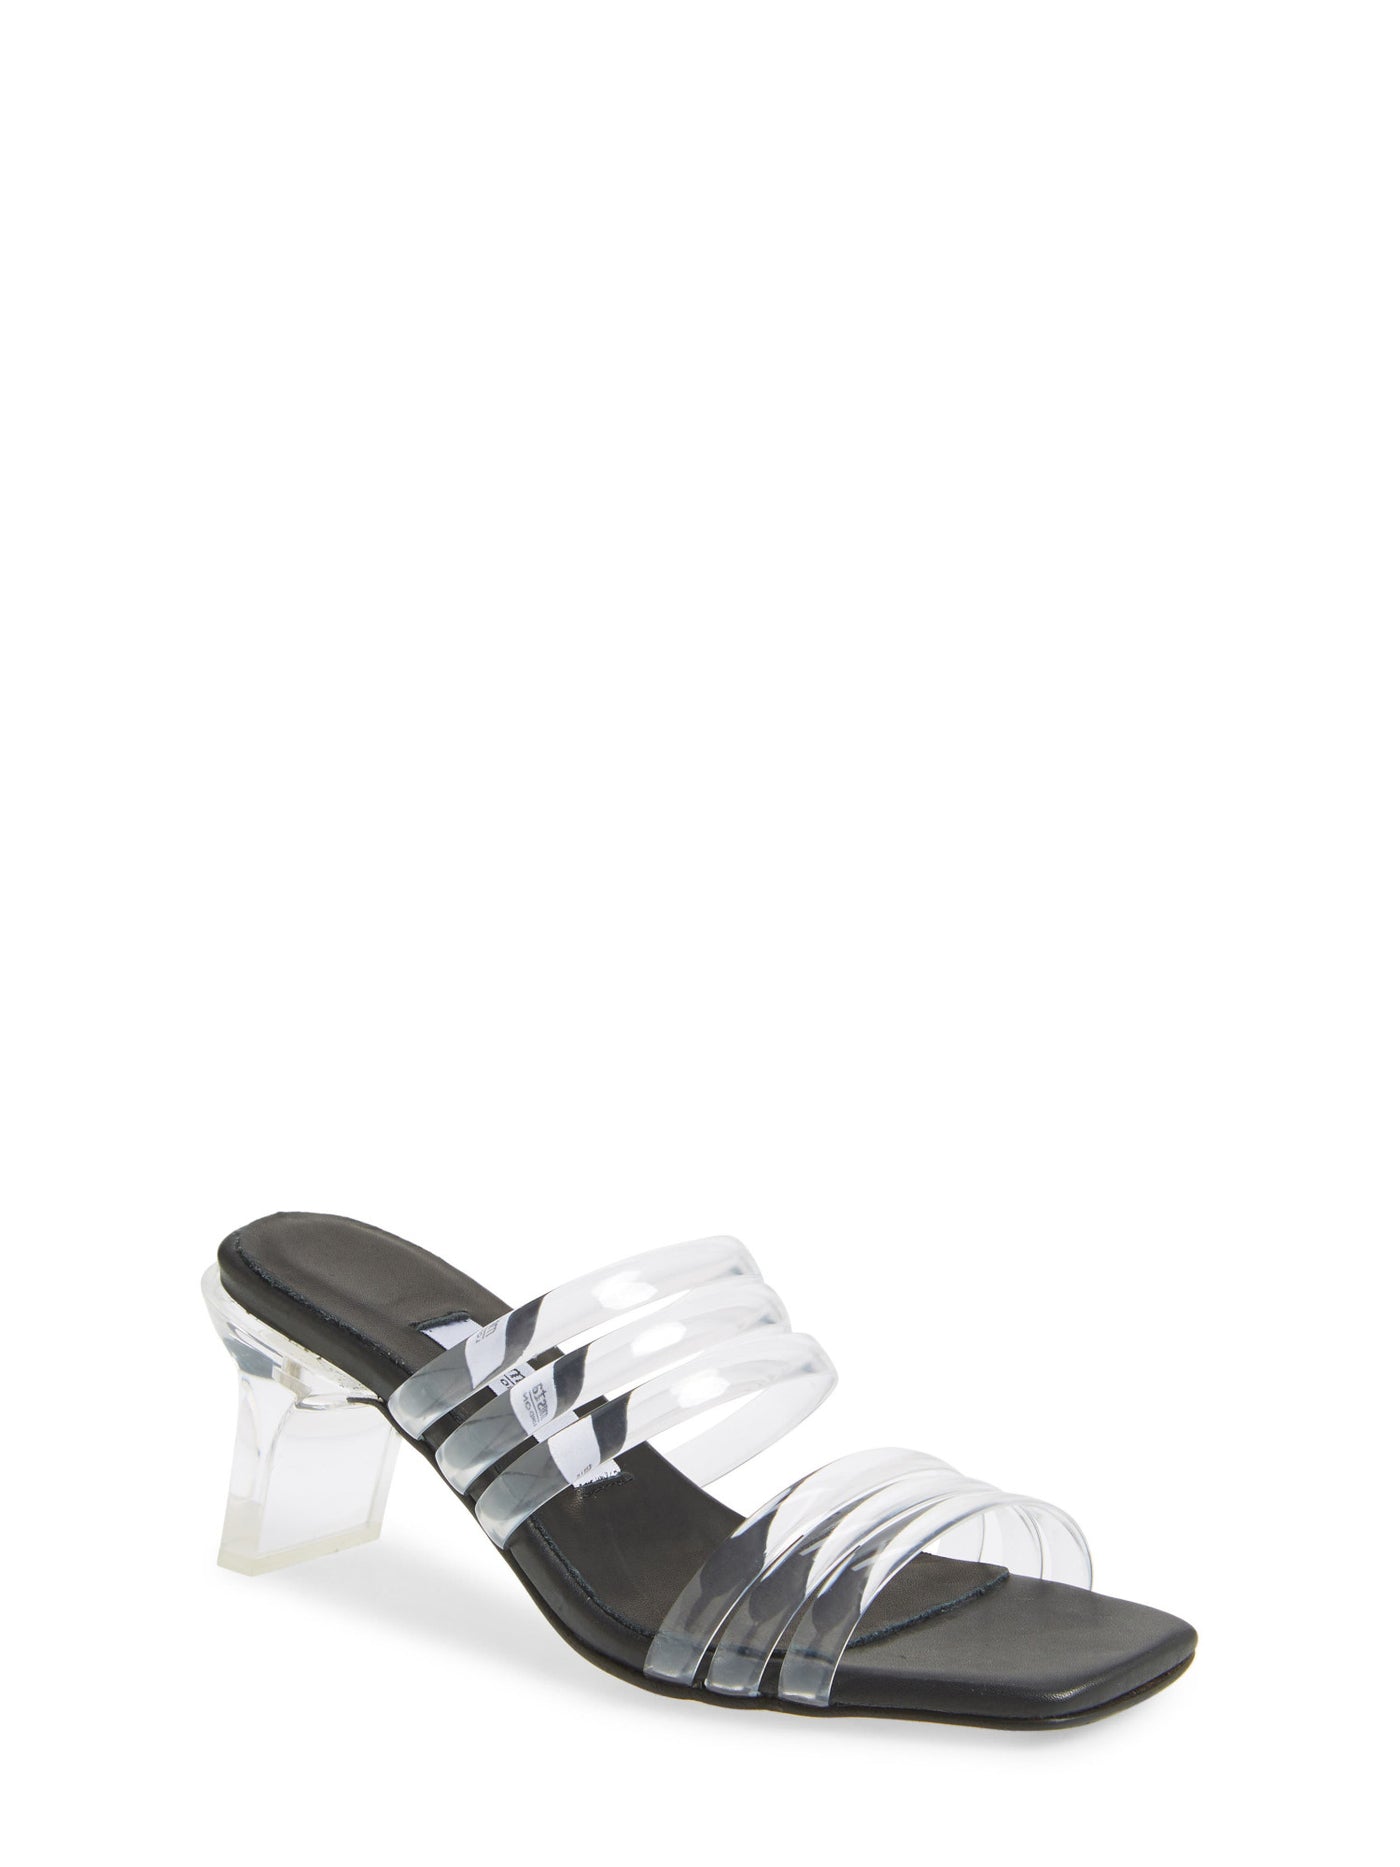 MIISTA Womens Black Strappy Comfort Helena Square Toe Block Heel Slip On Leather Slide Sandals Shoes 5.5 M